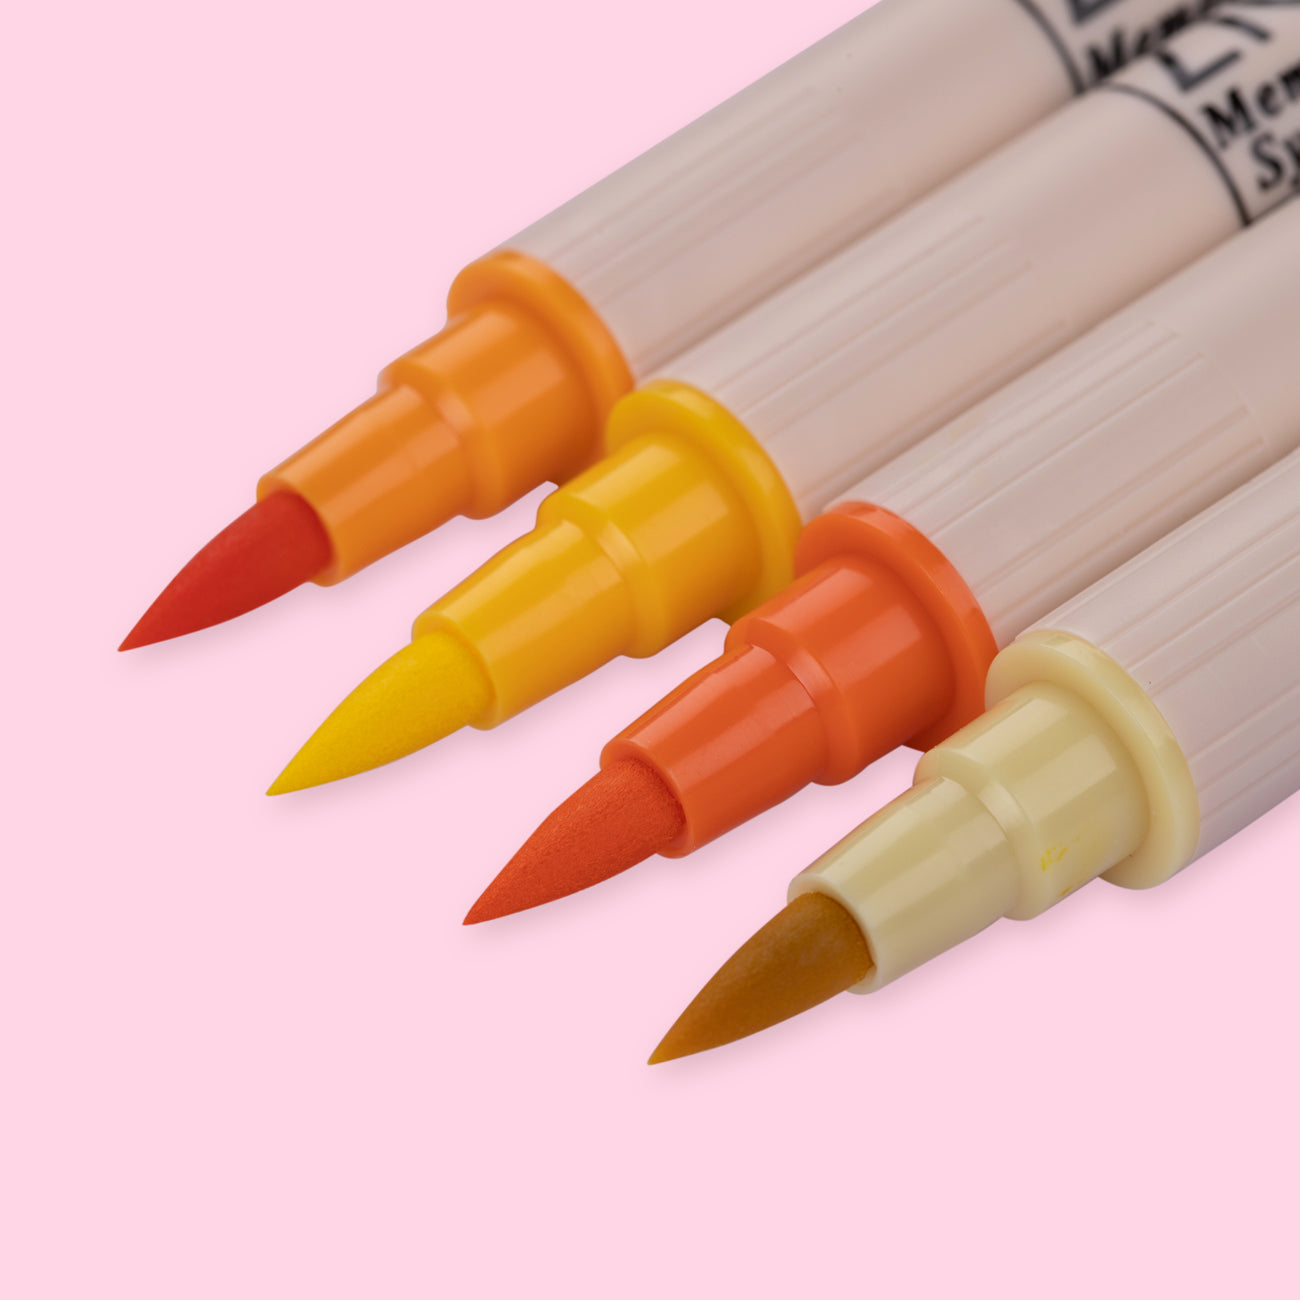 Kuretake Zig Brushables Brush Pen - 4 Colors Yellow Set